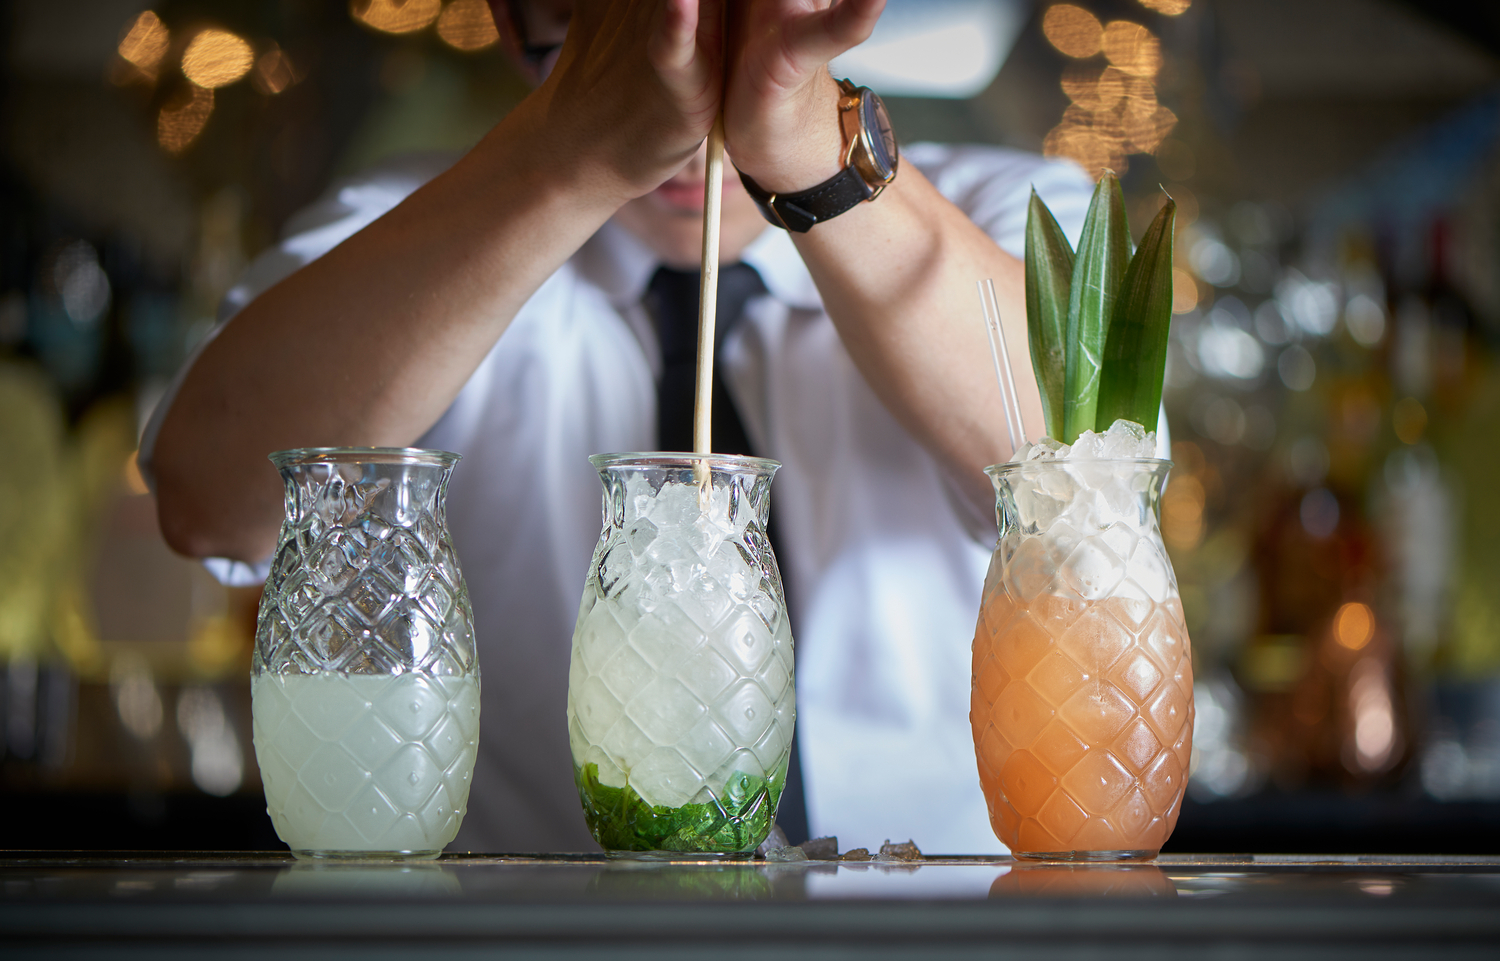 Bartender prepares cocktails in Libbey's Pineapple Glasses